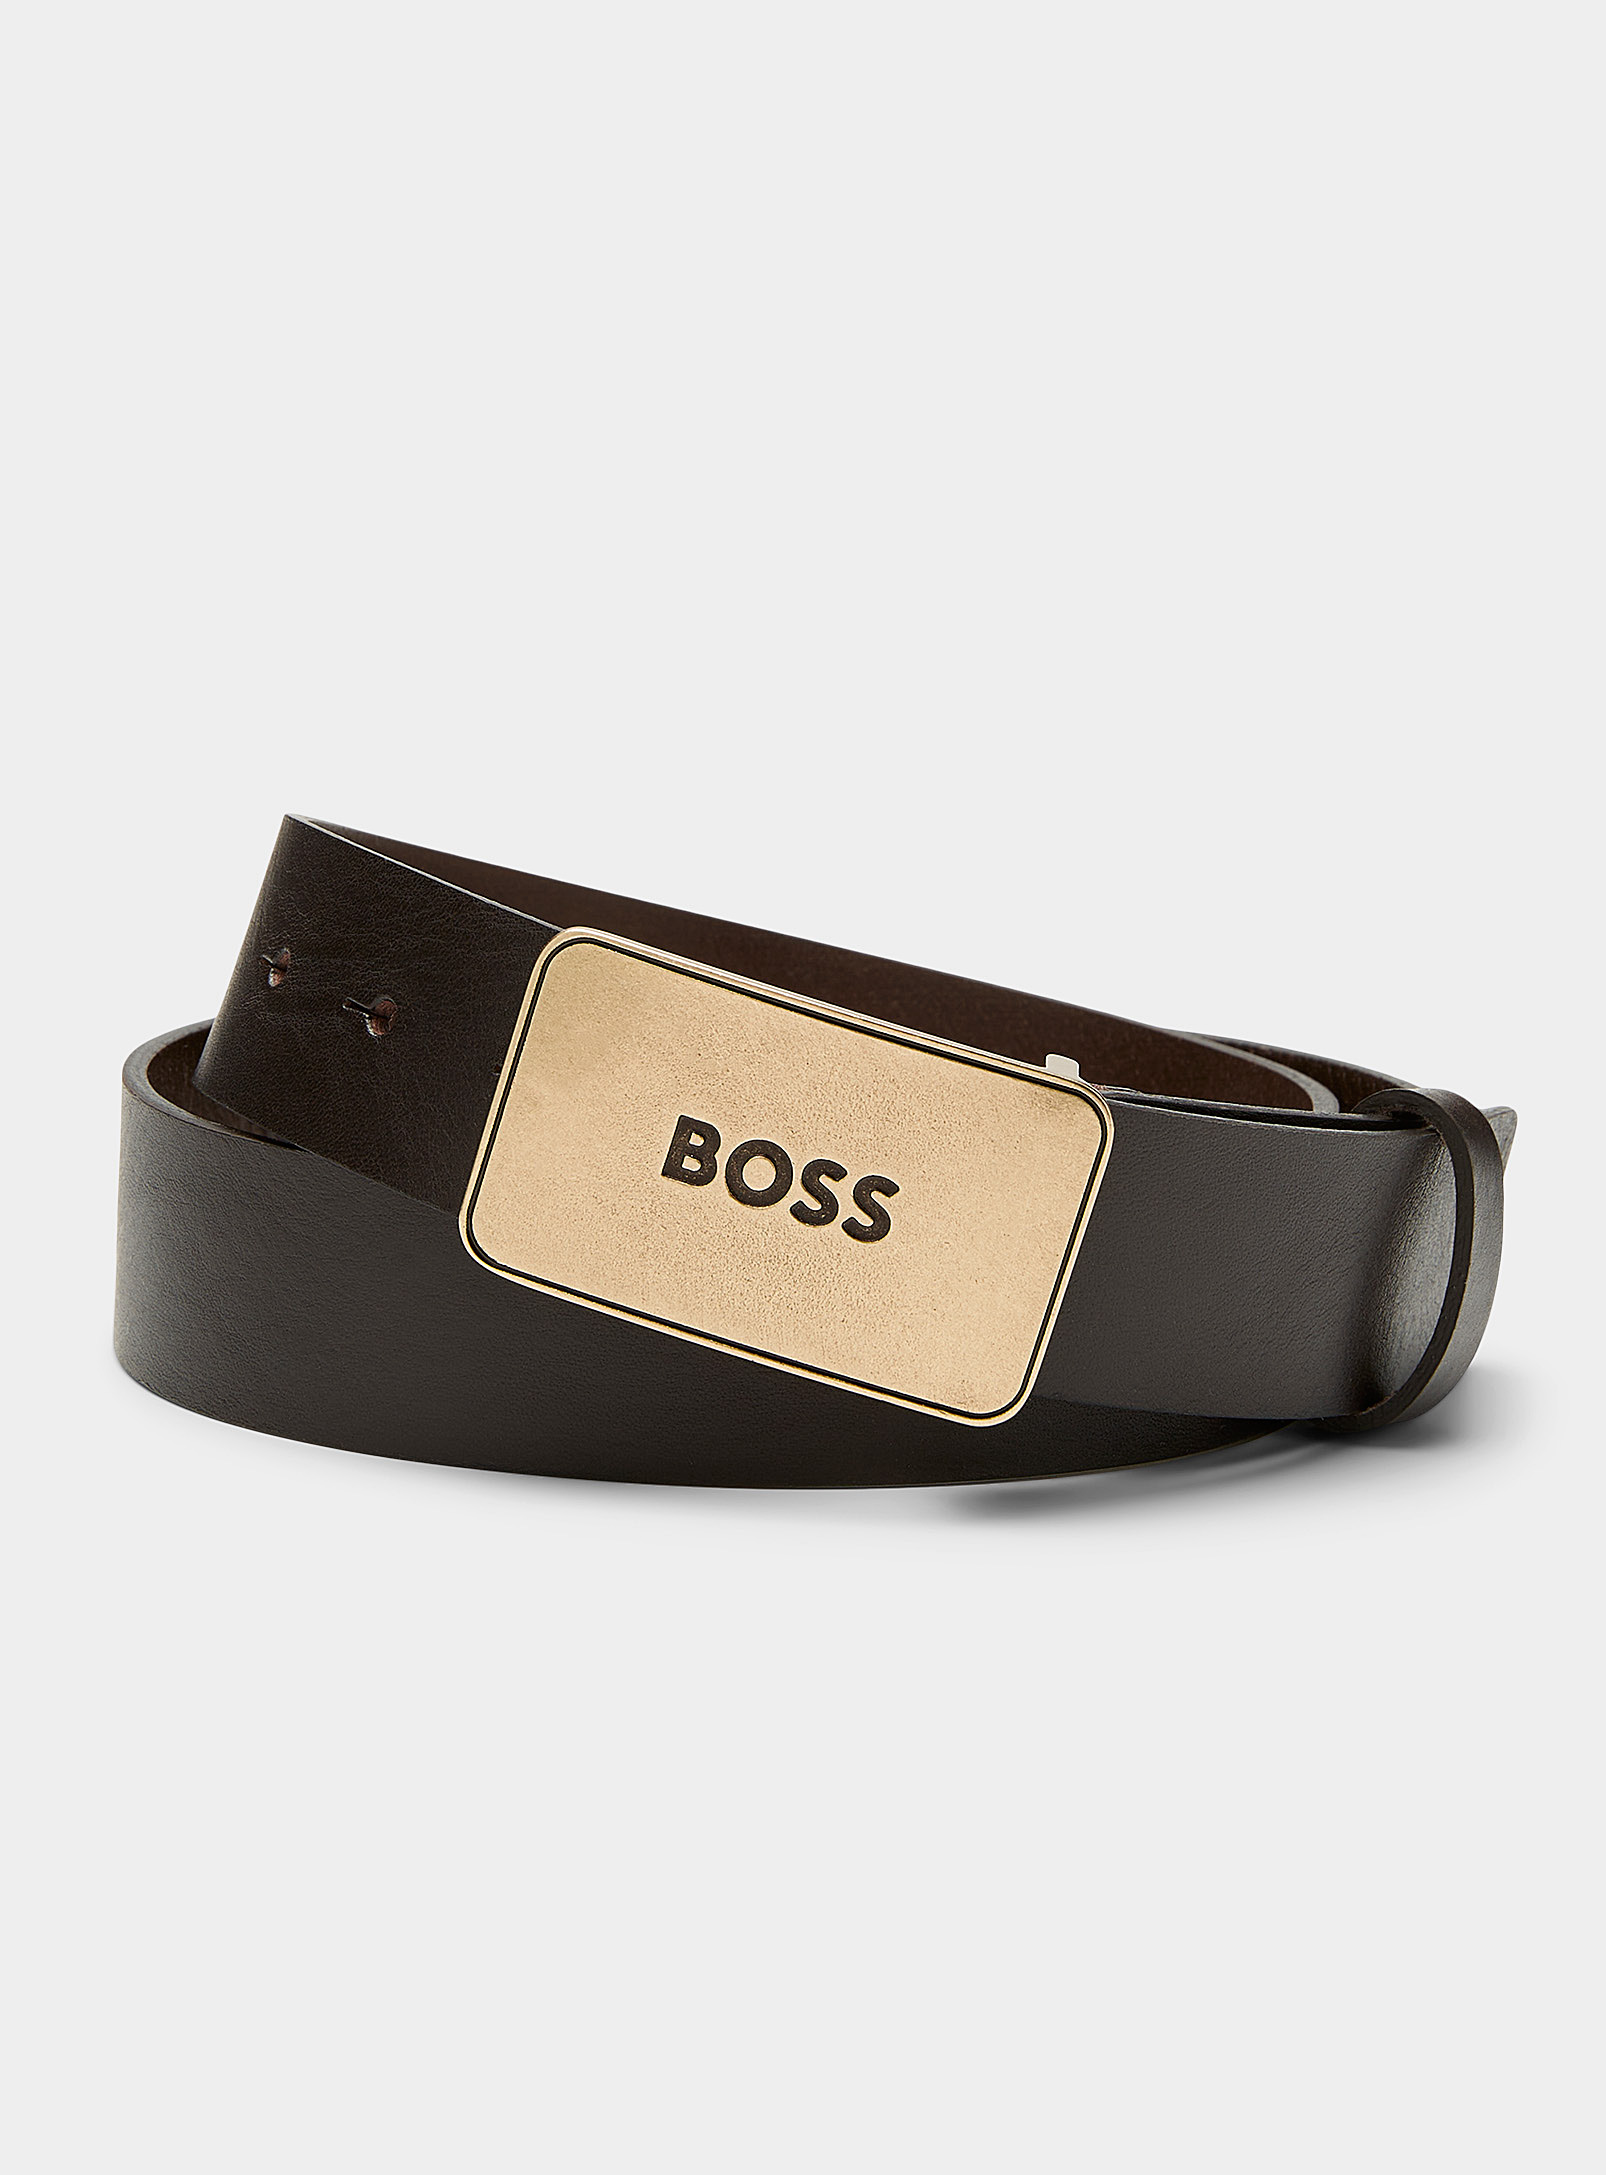 BOSS - La ceinture cuir brun boucle plaque